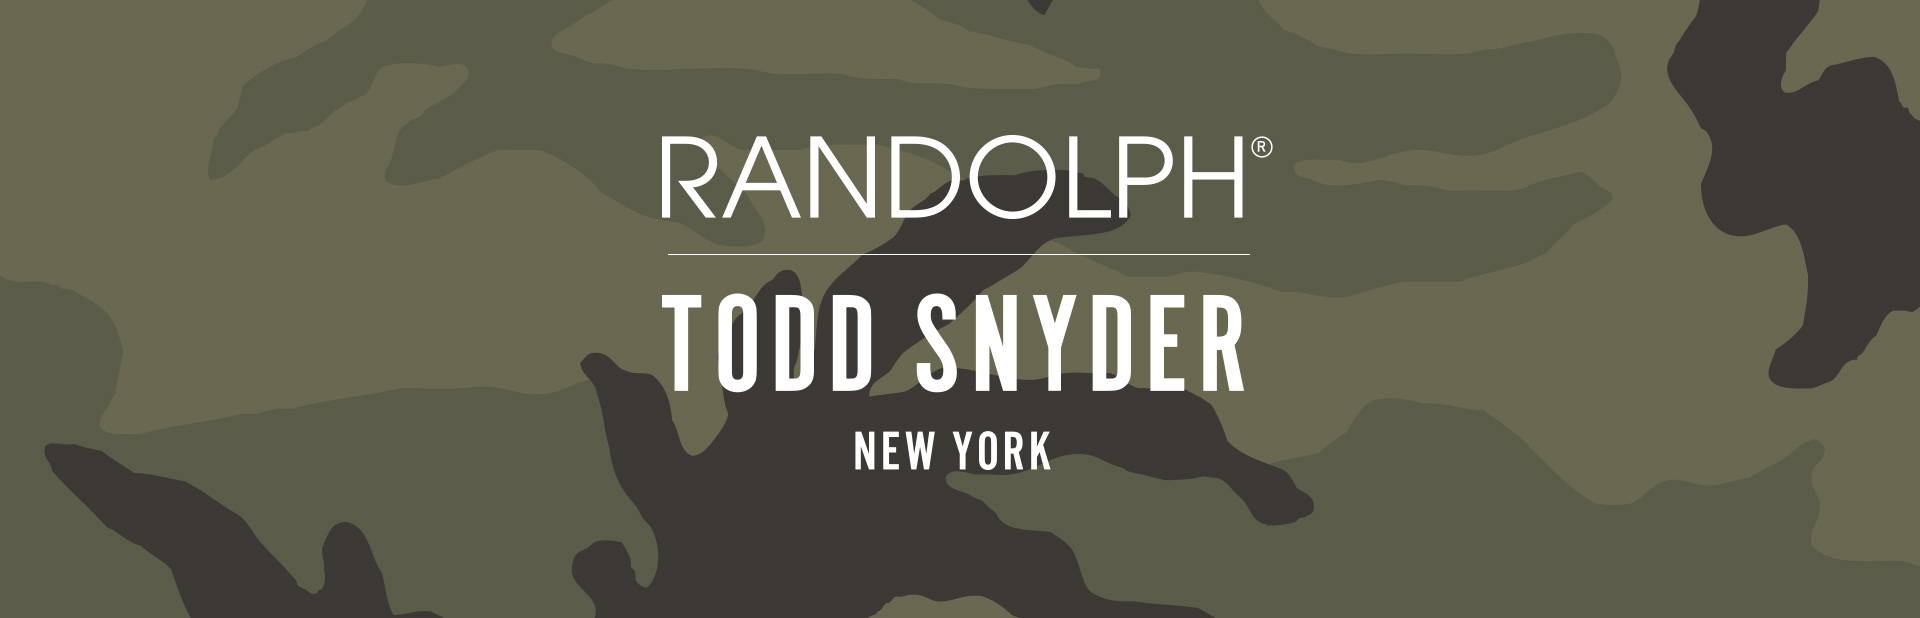 Randolph for Todd Snyder Sunglasses Collaboration